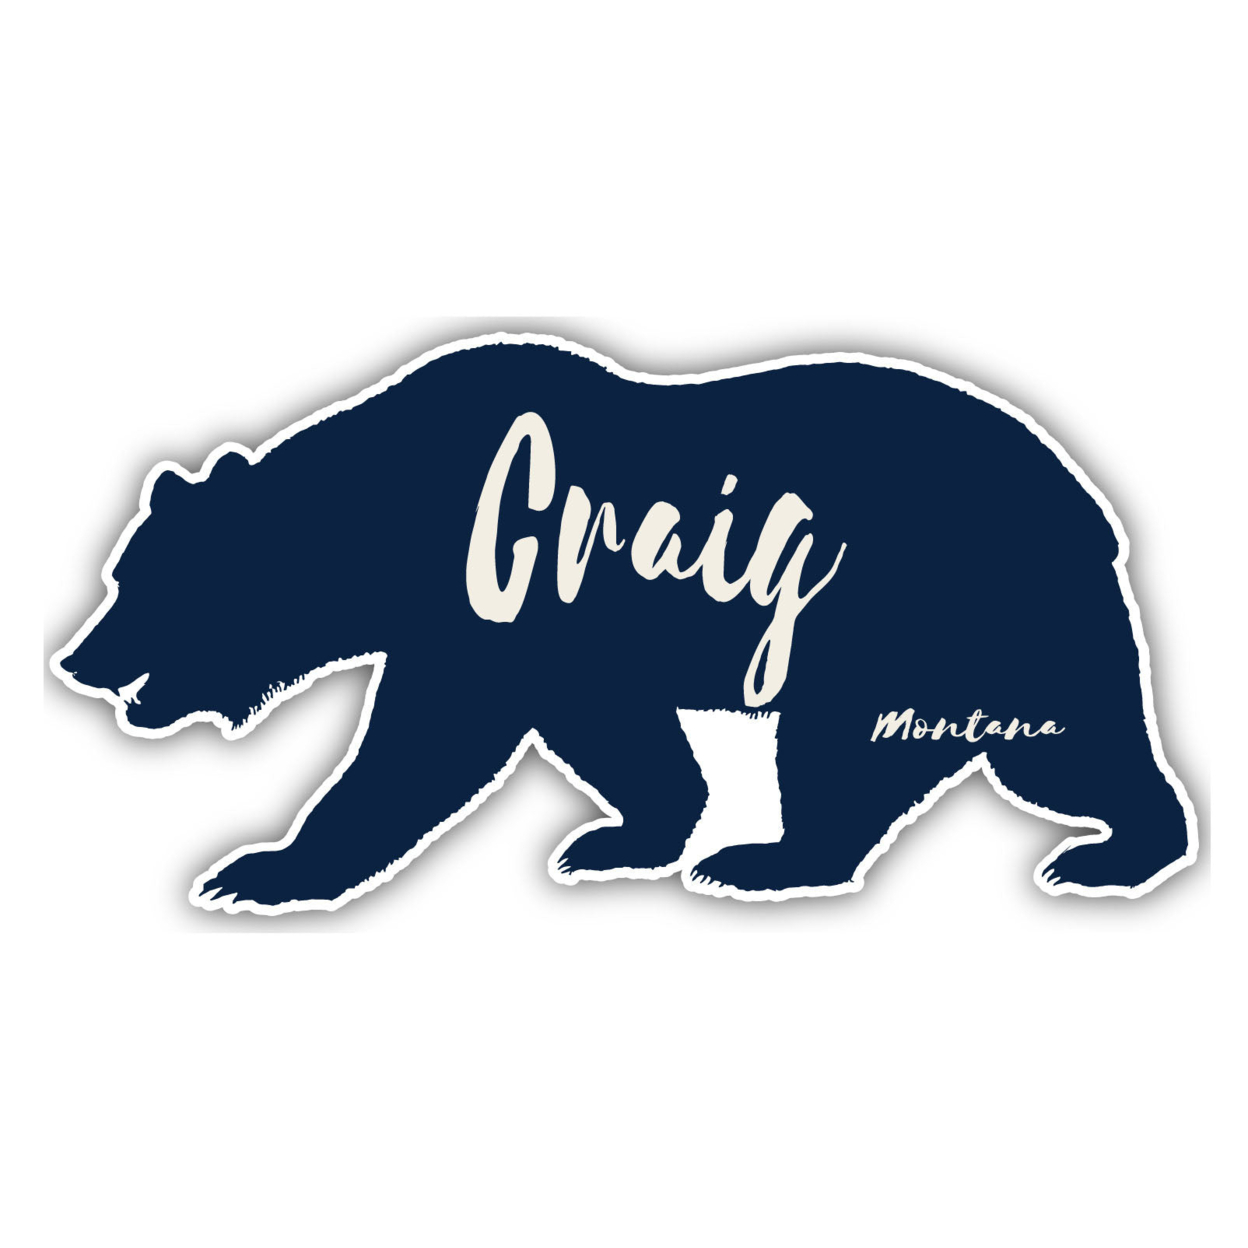 Craig Montana Souvenir Decorative Stickers (Choose Theme And Size) - Single Unit, 8-Inch, Bear